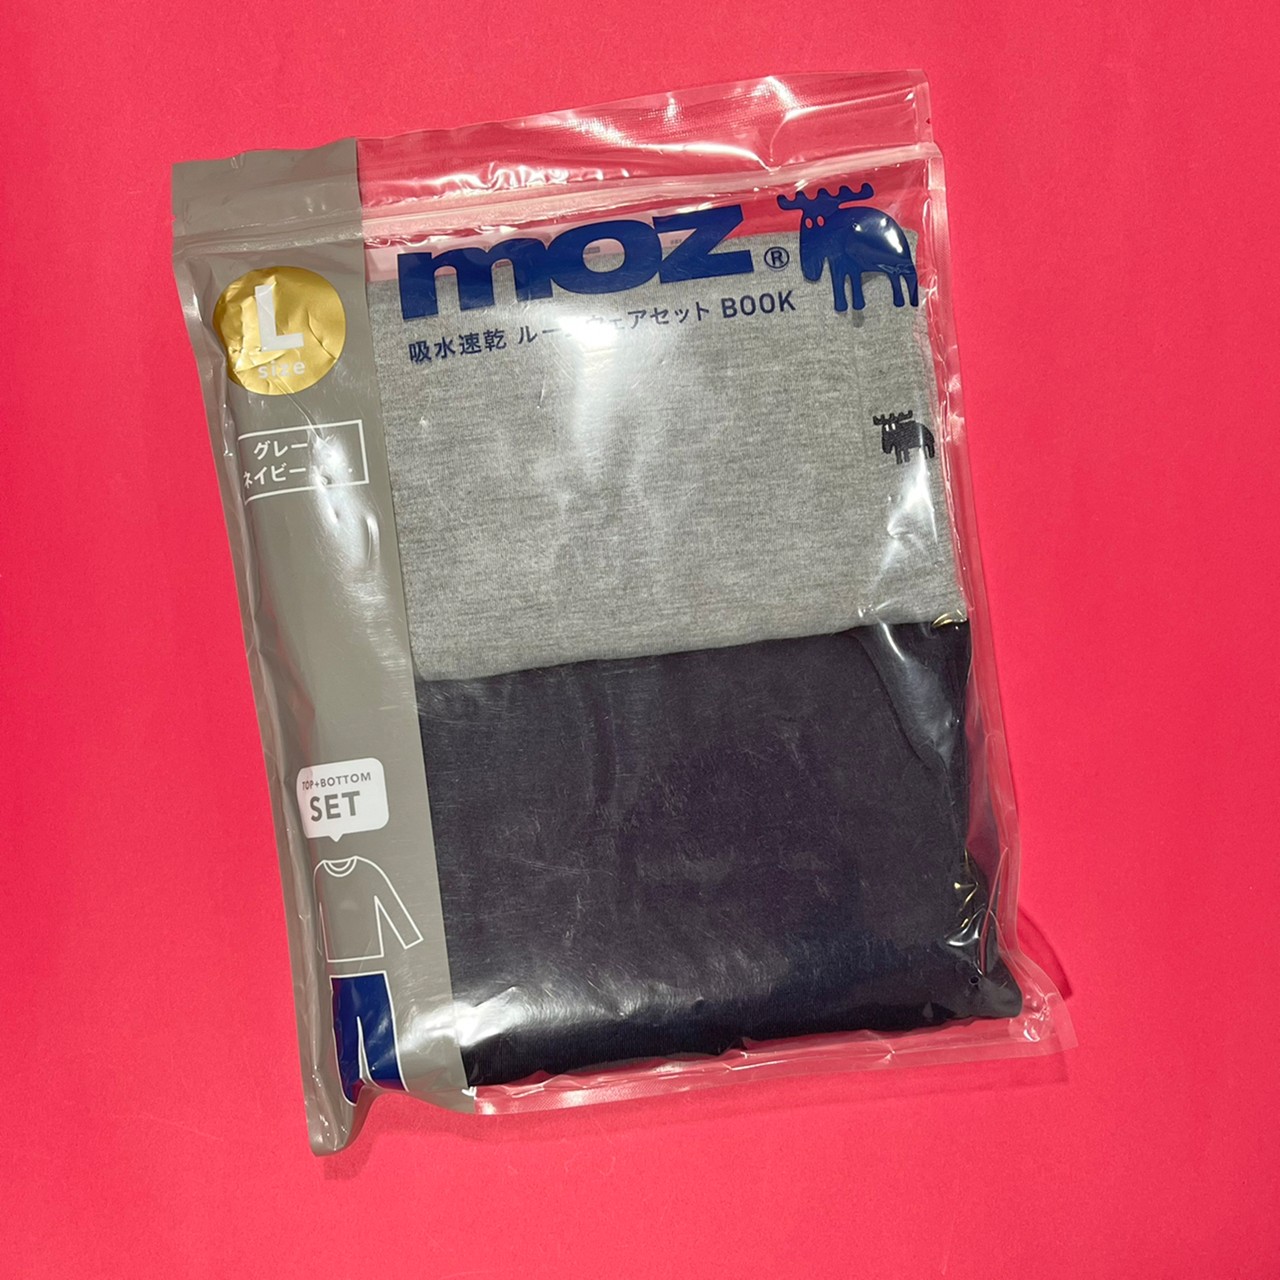 moz×ルームウェアセット、グレーが包装されている画像